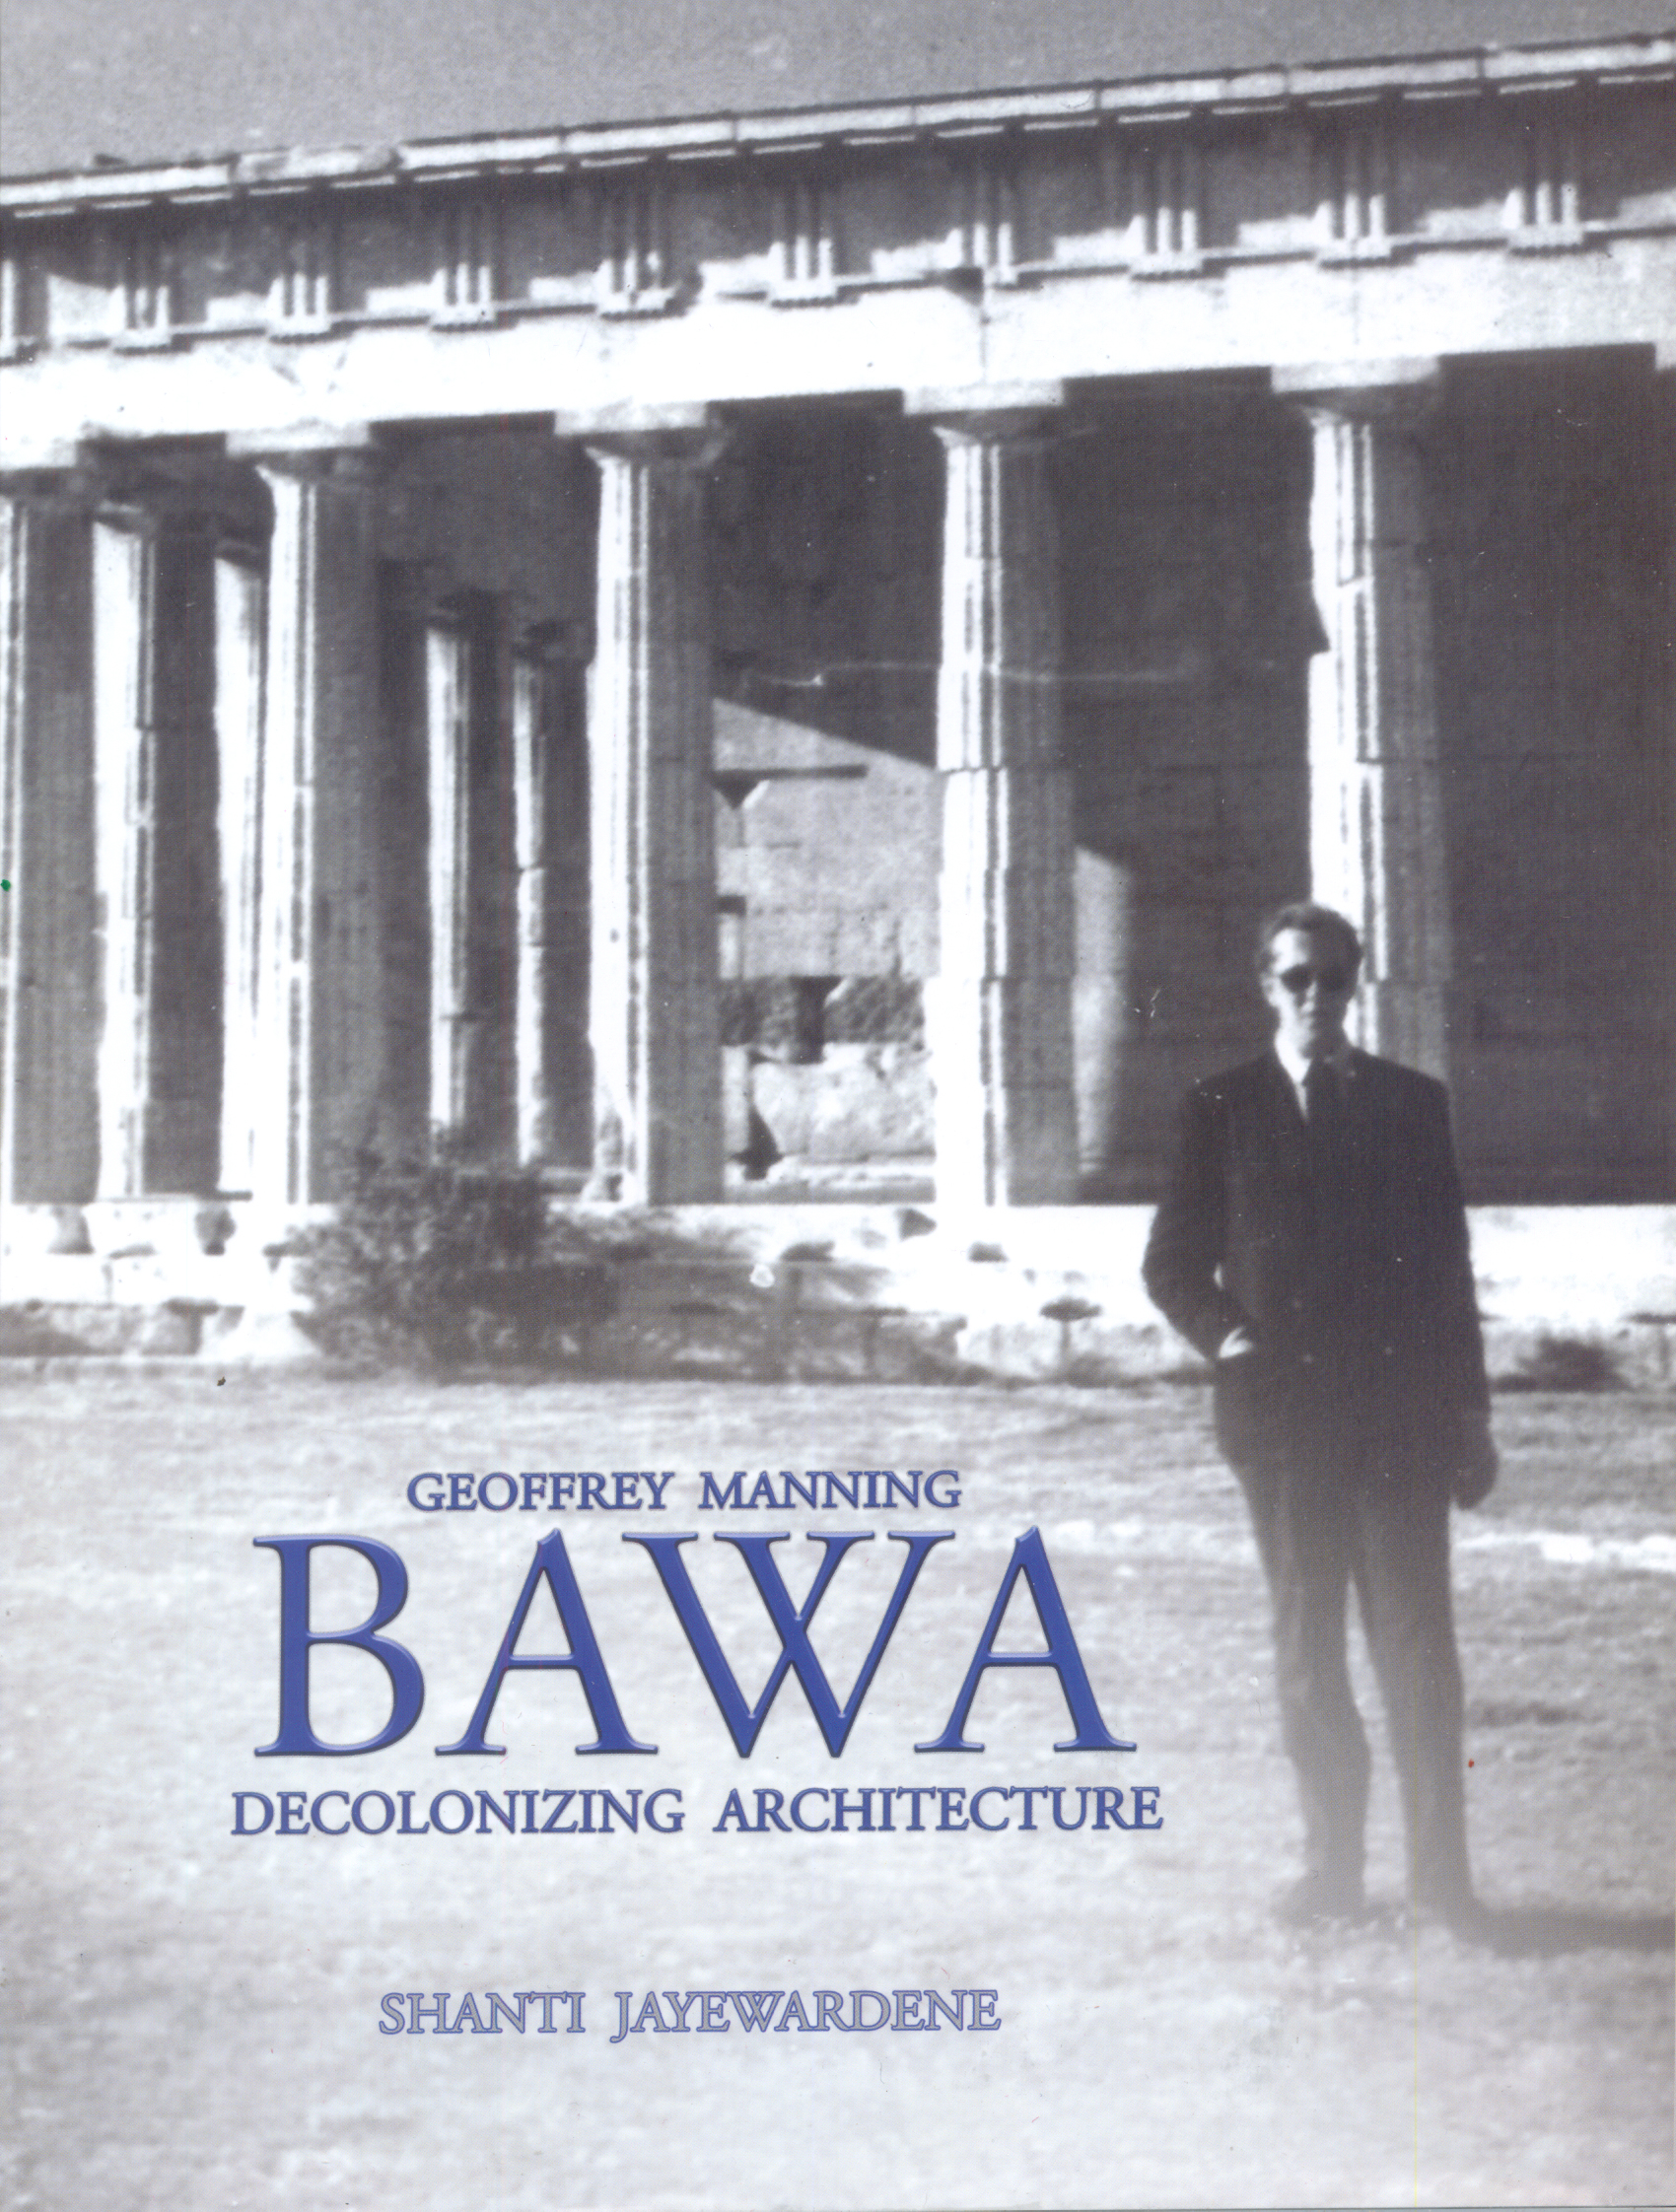 Geoffrey Manning Bawa - Decolonizing Architecture